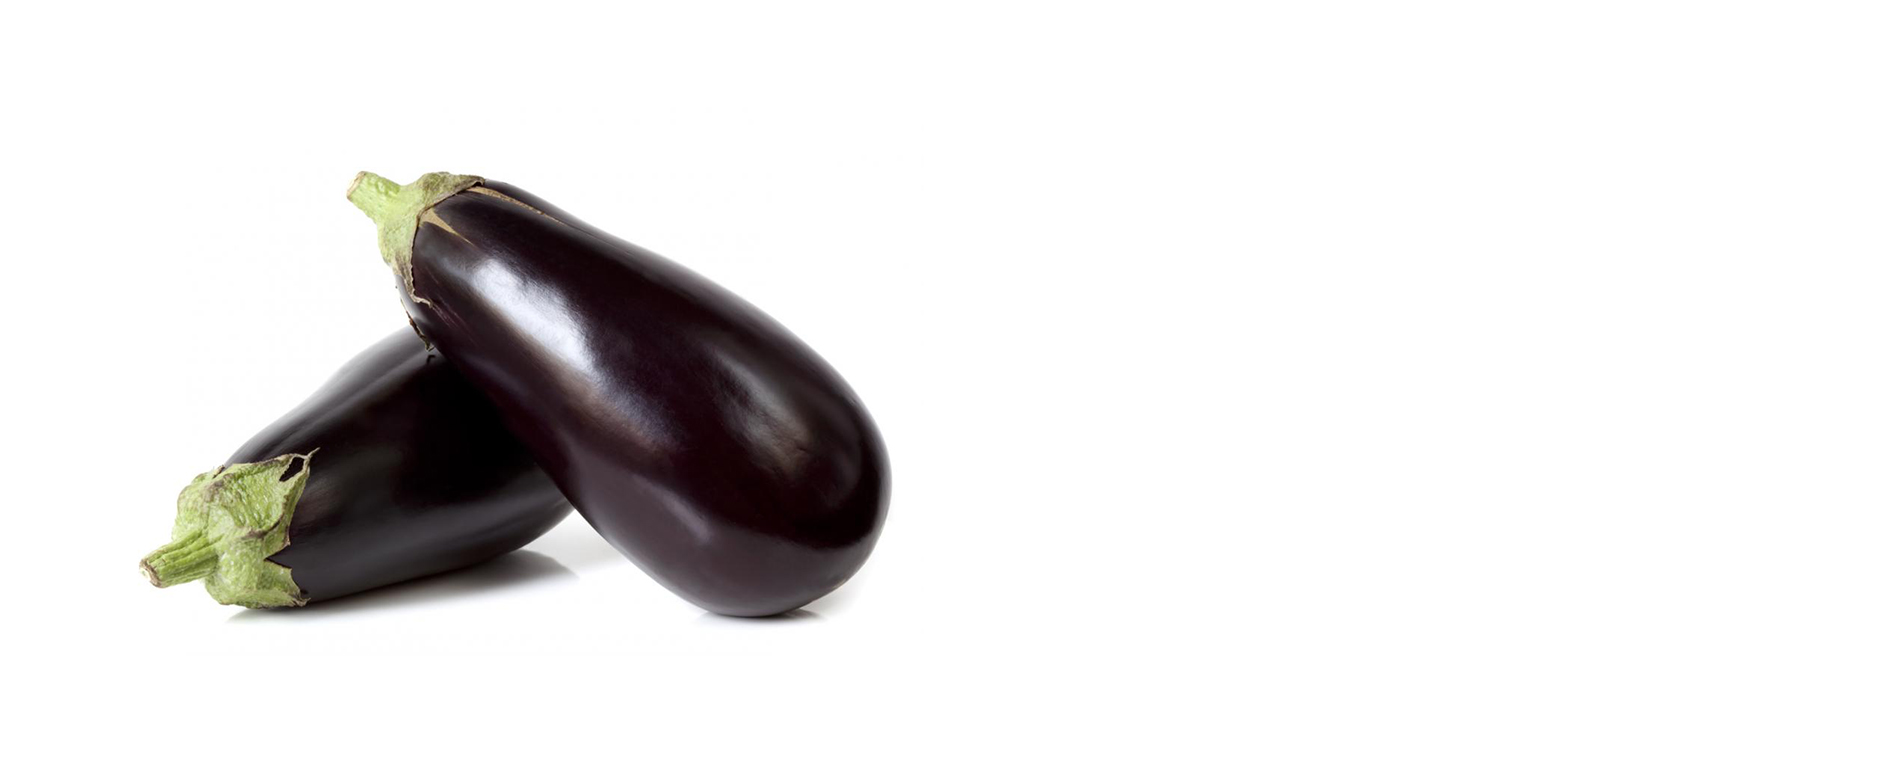 eggplant image